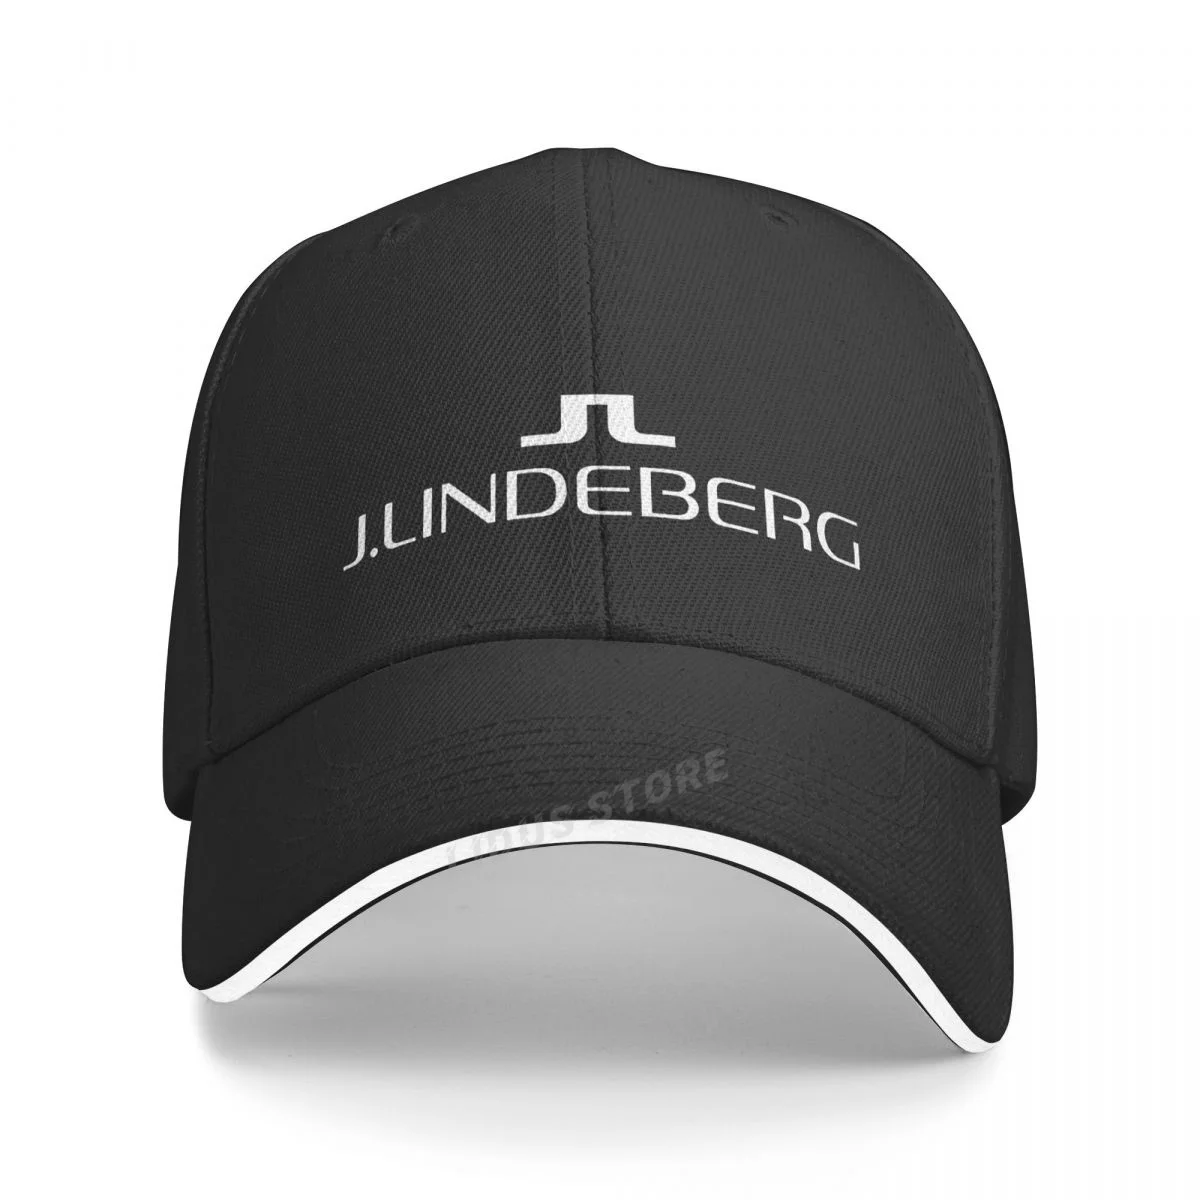 J Lindeberg Baseball Caps Cool Men And Women Adjustable Outdoor Unisex Summer Sun Hats